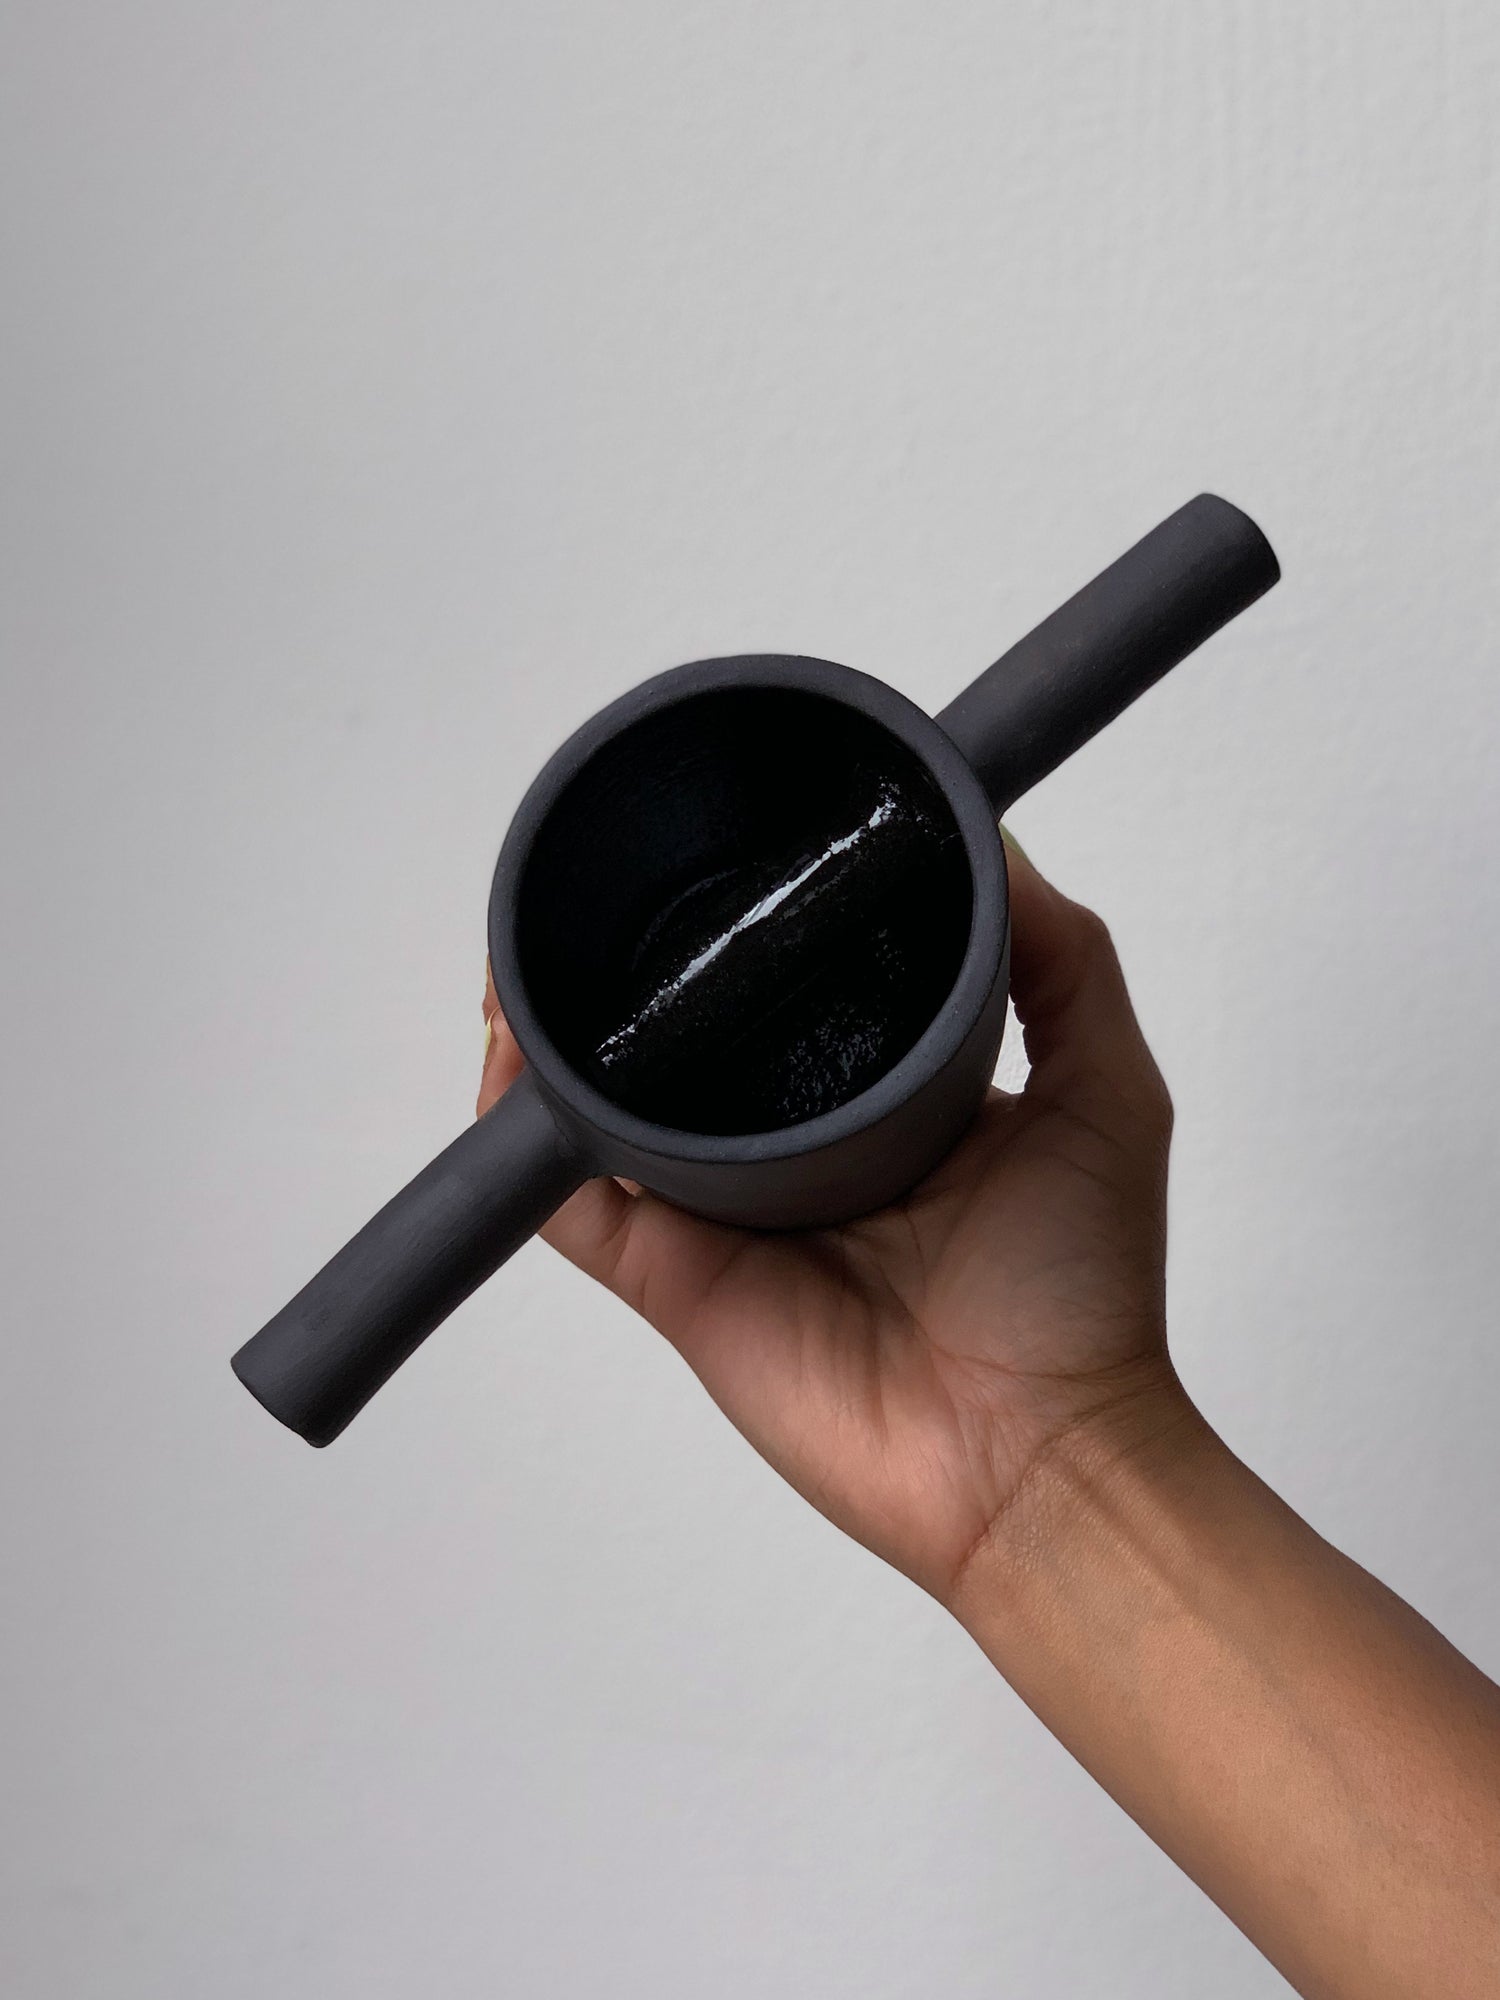 Black matte stoneware ceramic mug with a bar on each side of the mug as the handle.